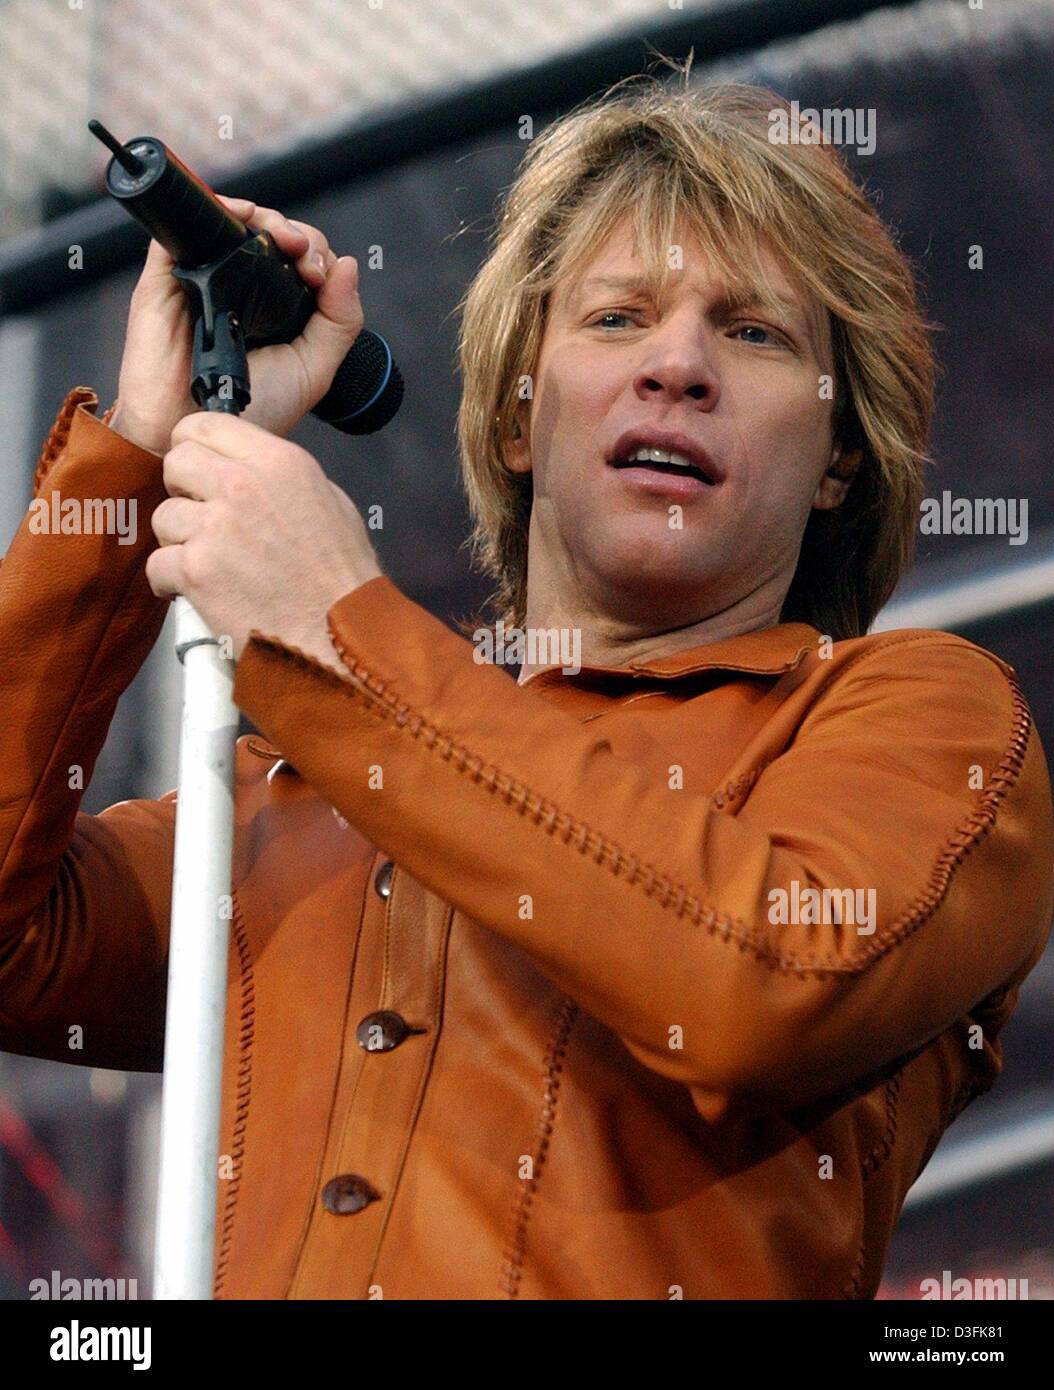 (dpa) - Jon Bon Jovi, lead singer of the US rock band Bon Jovi, pictured at a concert in Bremen, Germany, 6 June 2003. Stock Photo